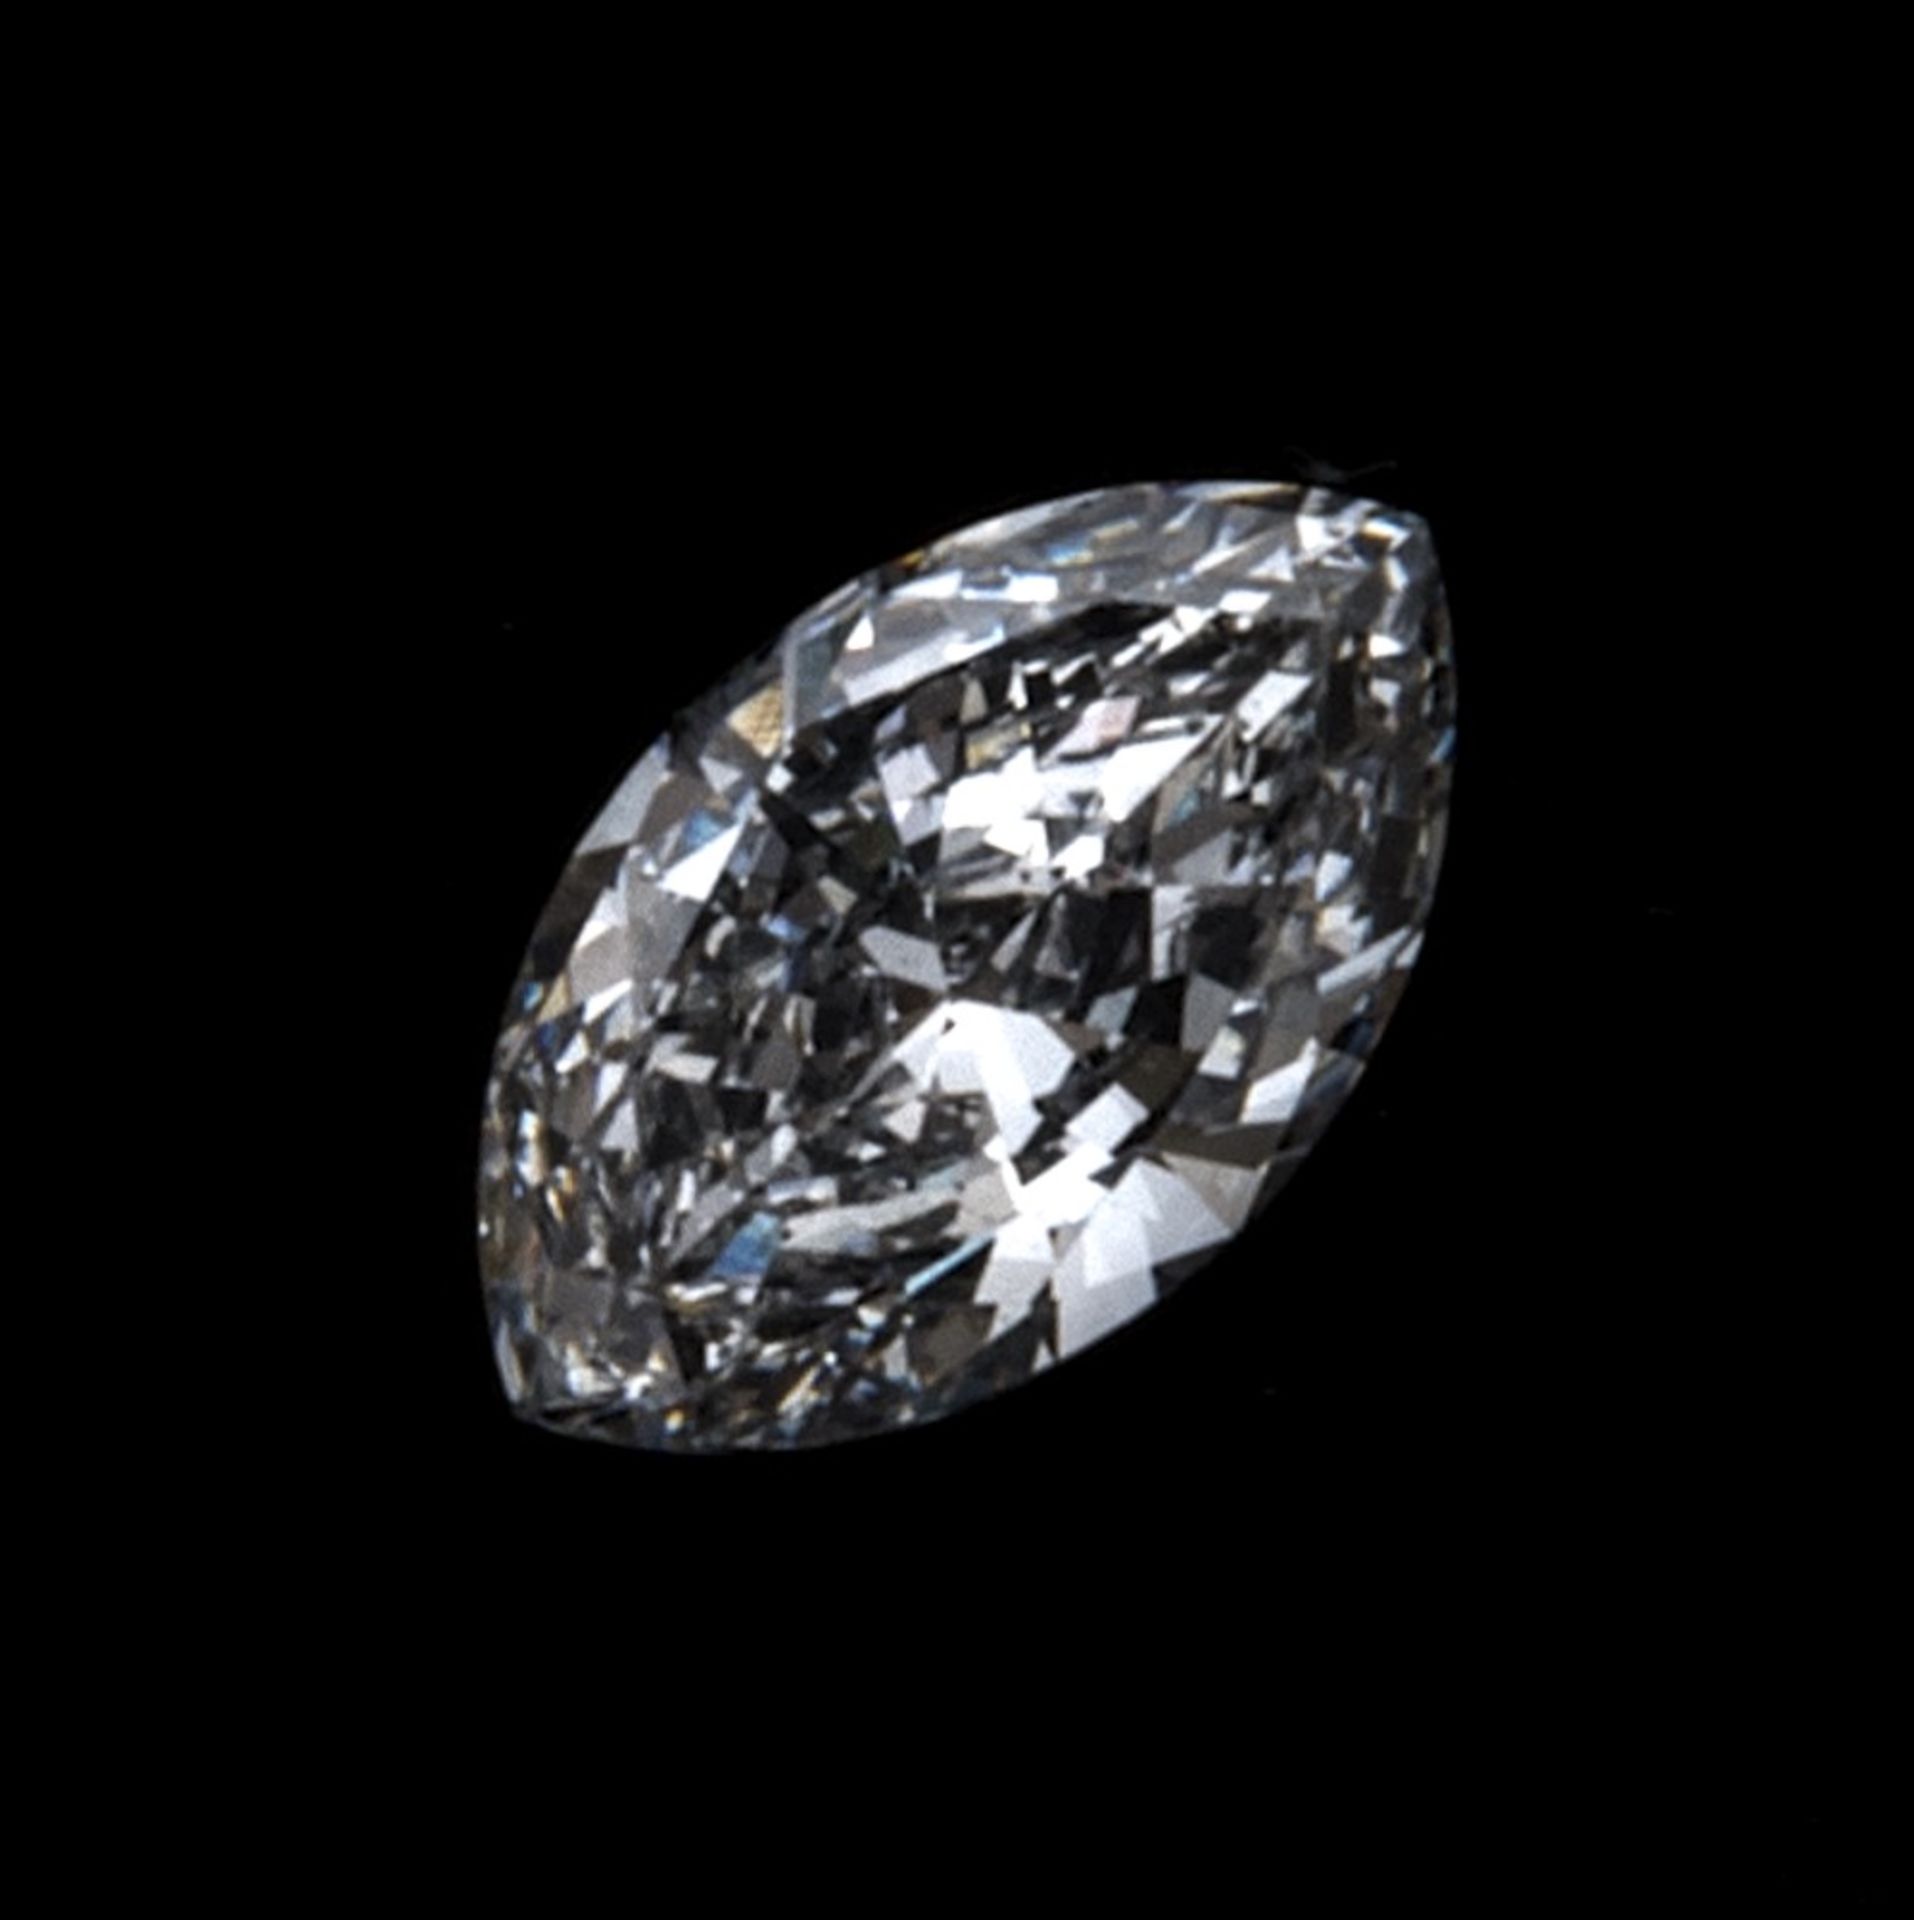 DIAMOND cut marquise. Measurements mm. 6.82 x 2.21, diamond ct. 0.38, color F, VVSI purity. Complete